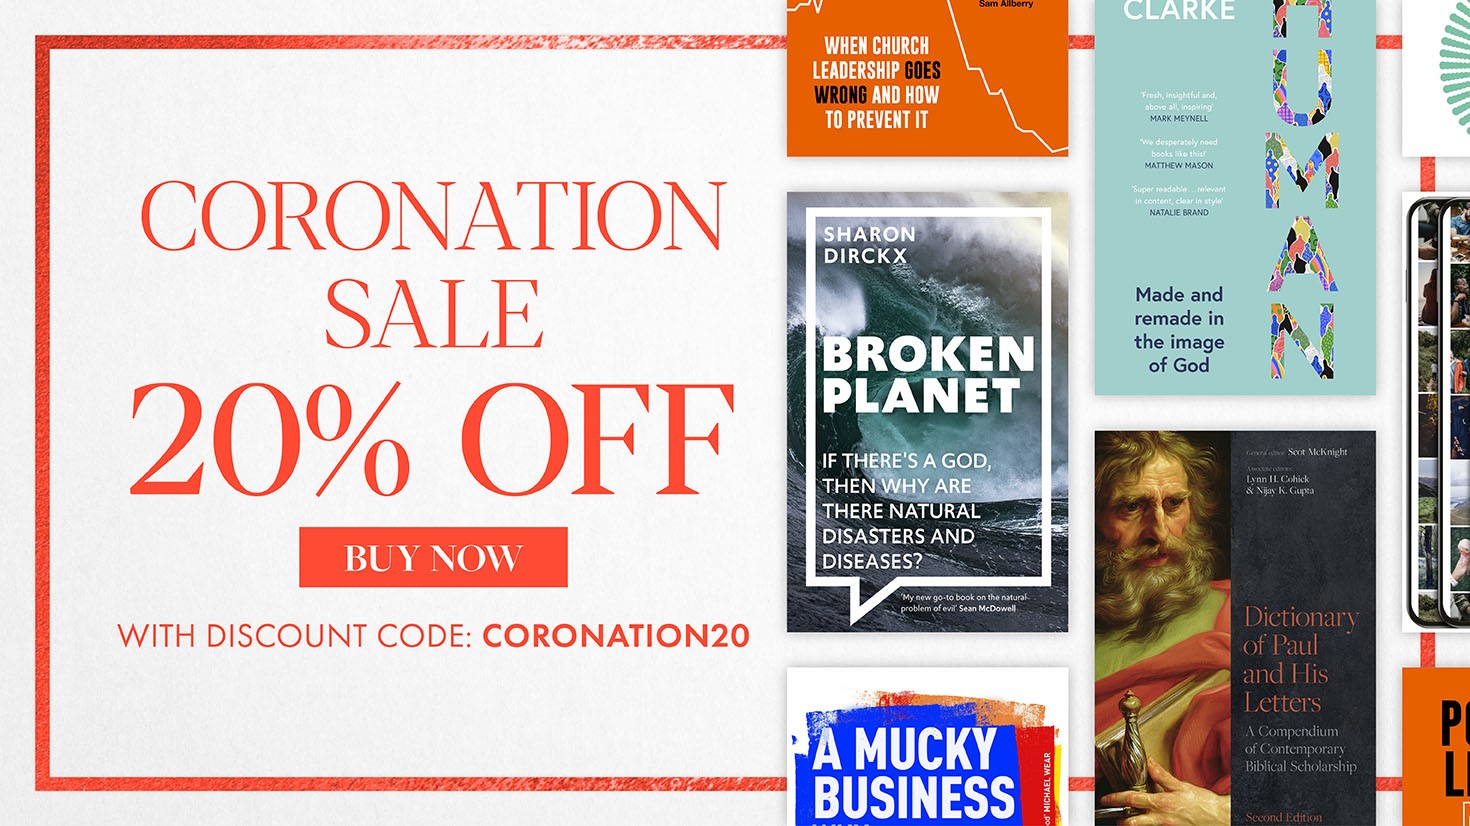 Coronation Sale: Enjoy 20% OFF the entire website